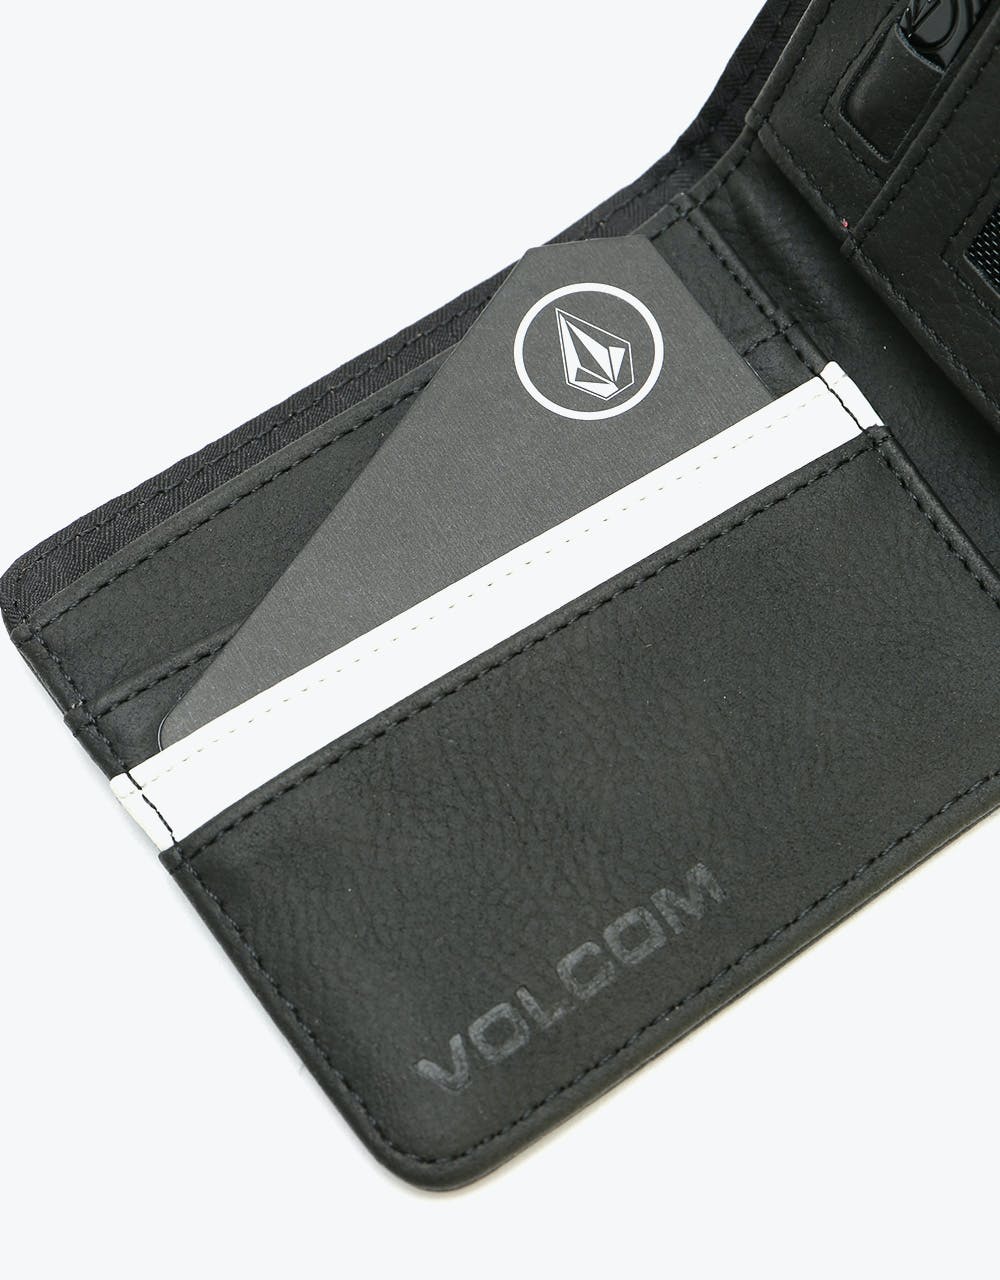 Volcom Slim Stone Wallet - Black